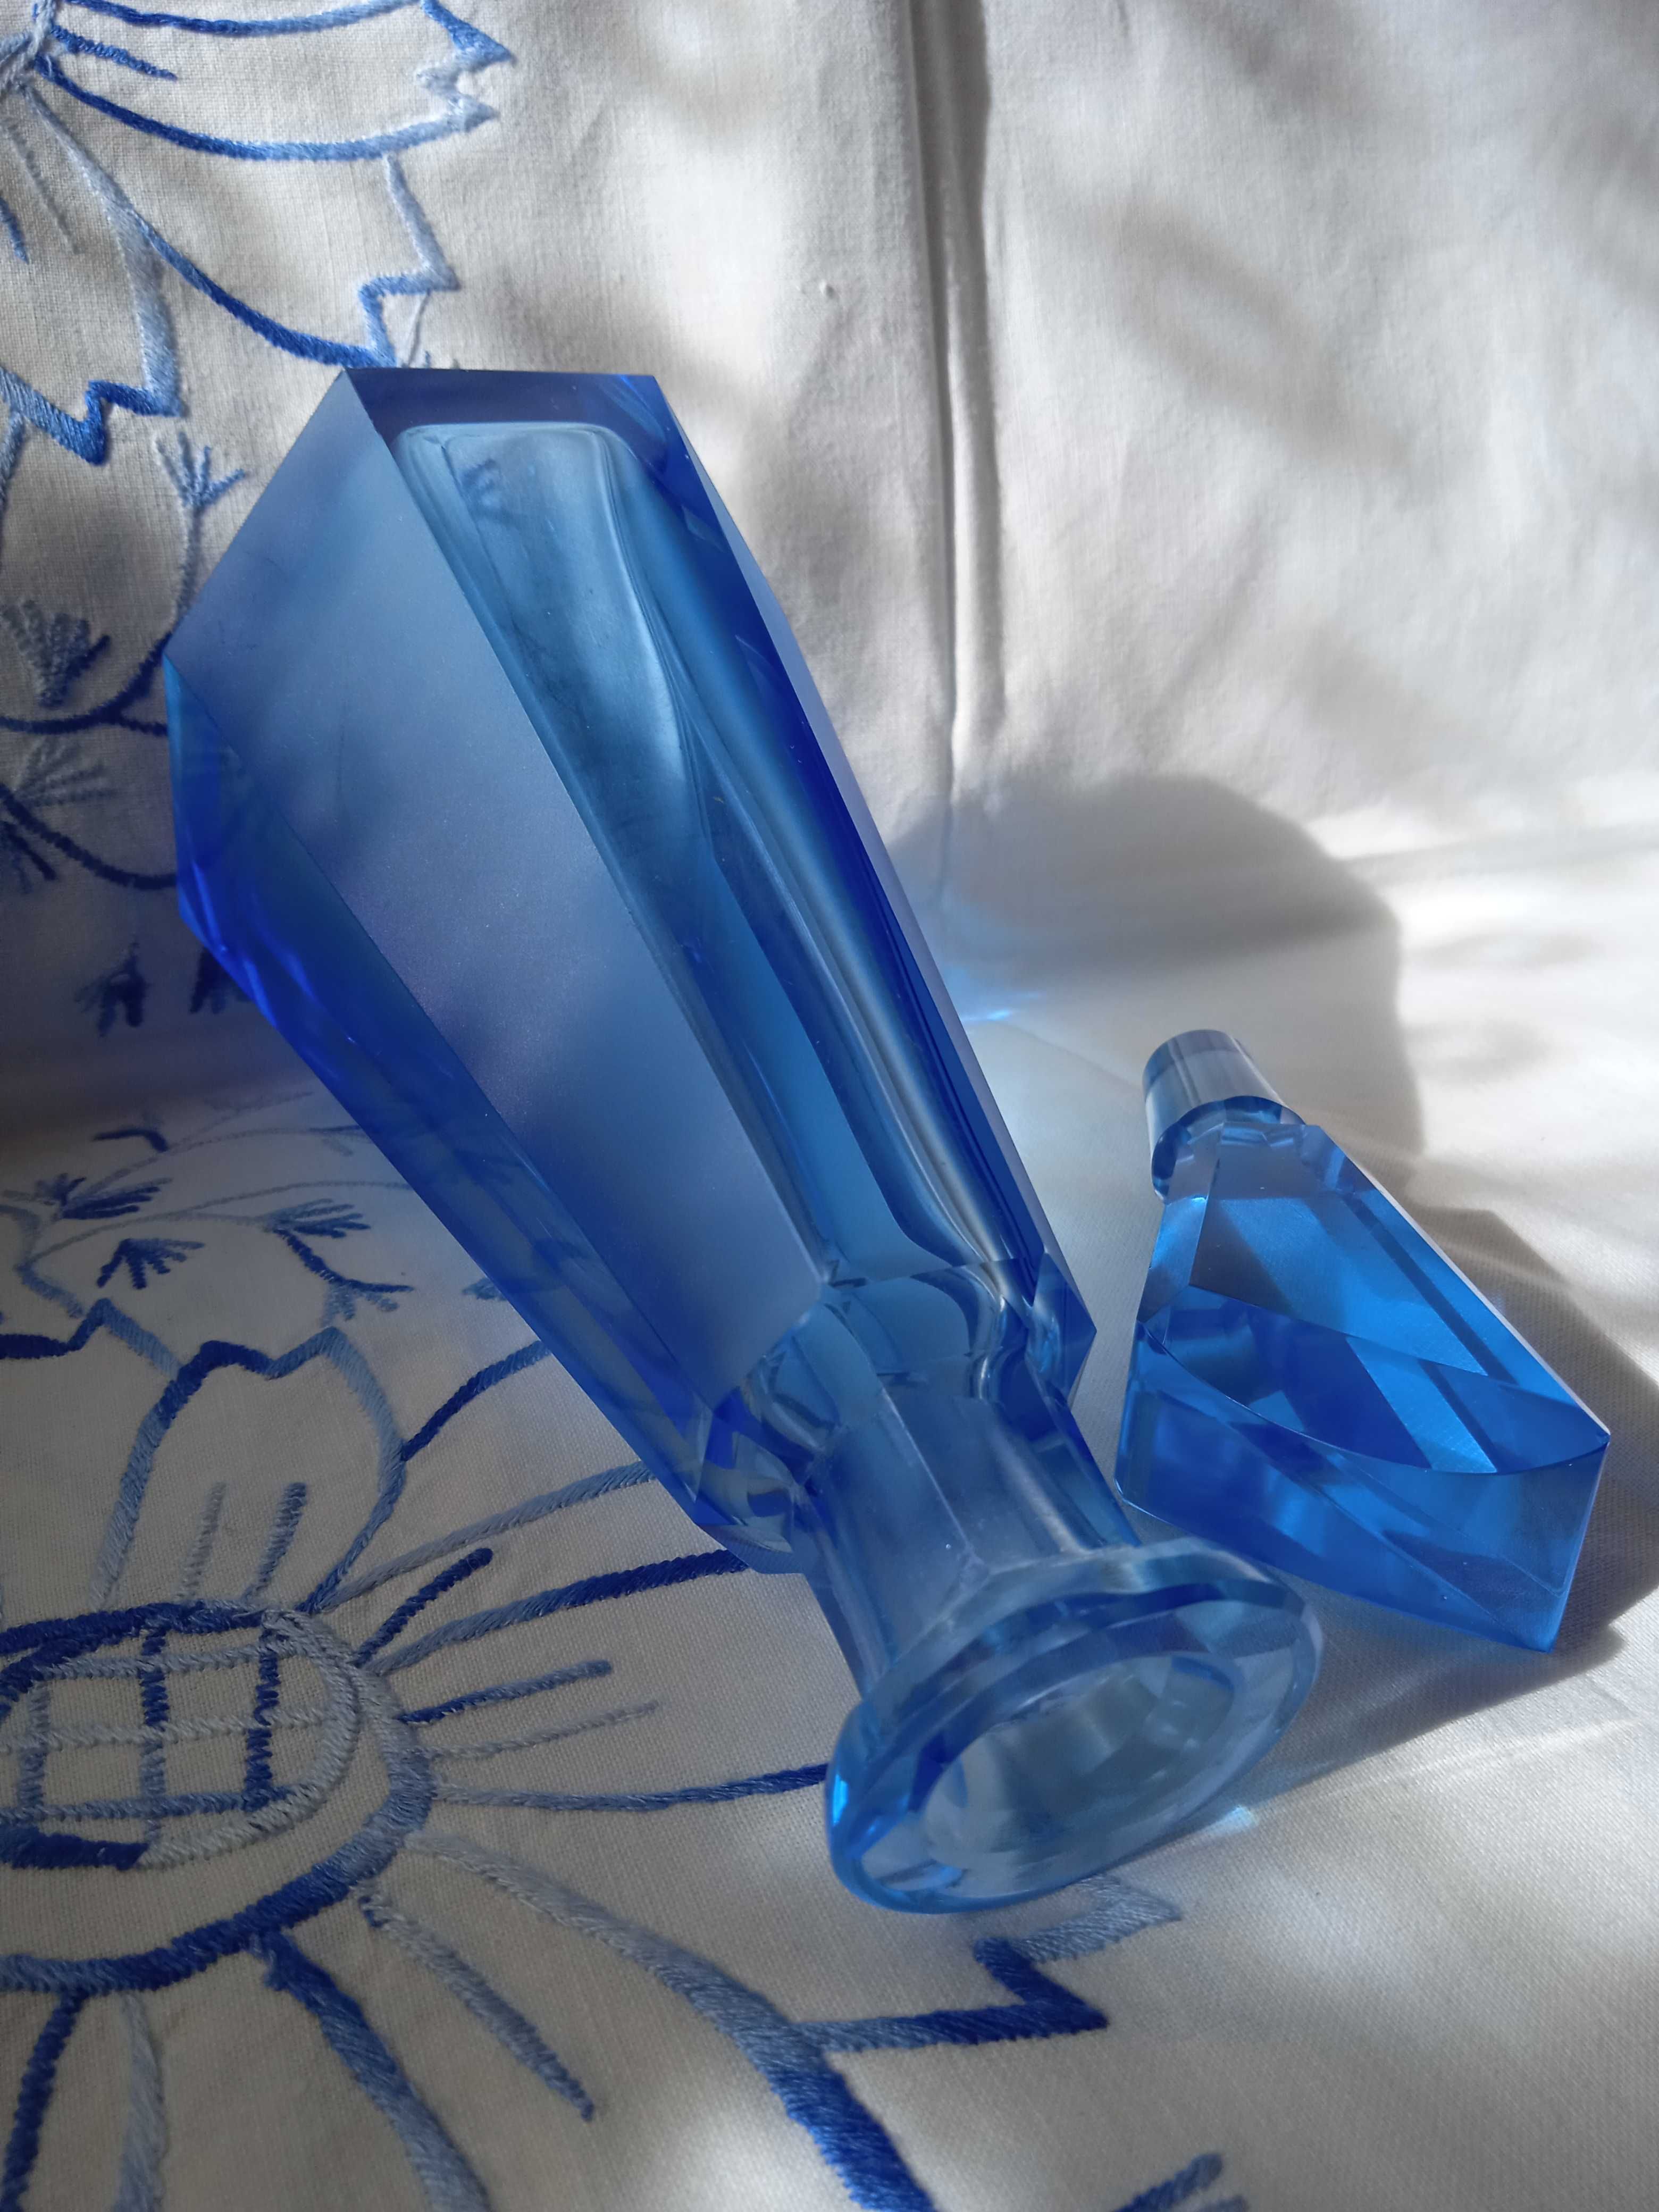 Moser karafka niebieska, kobalt, wys 23 cm, granatowa